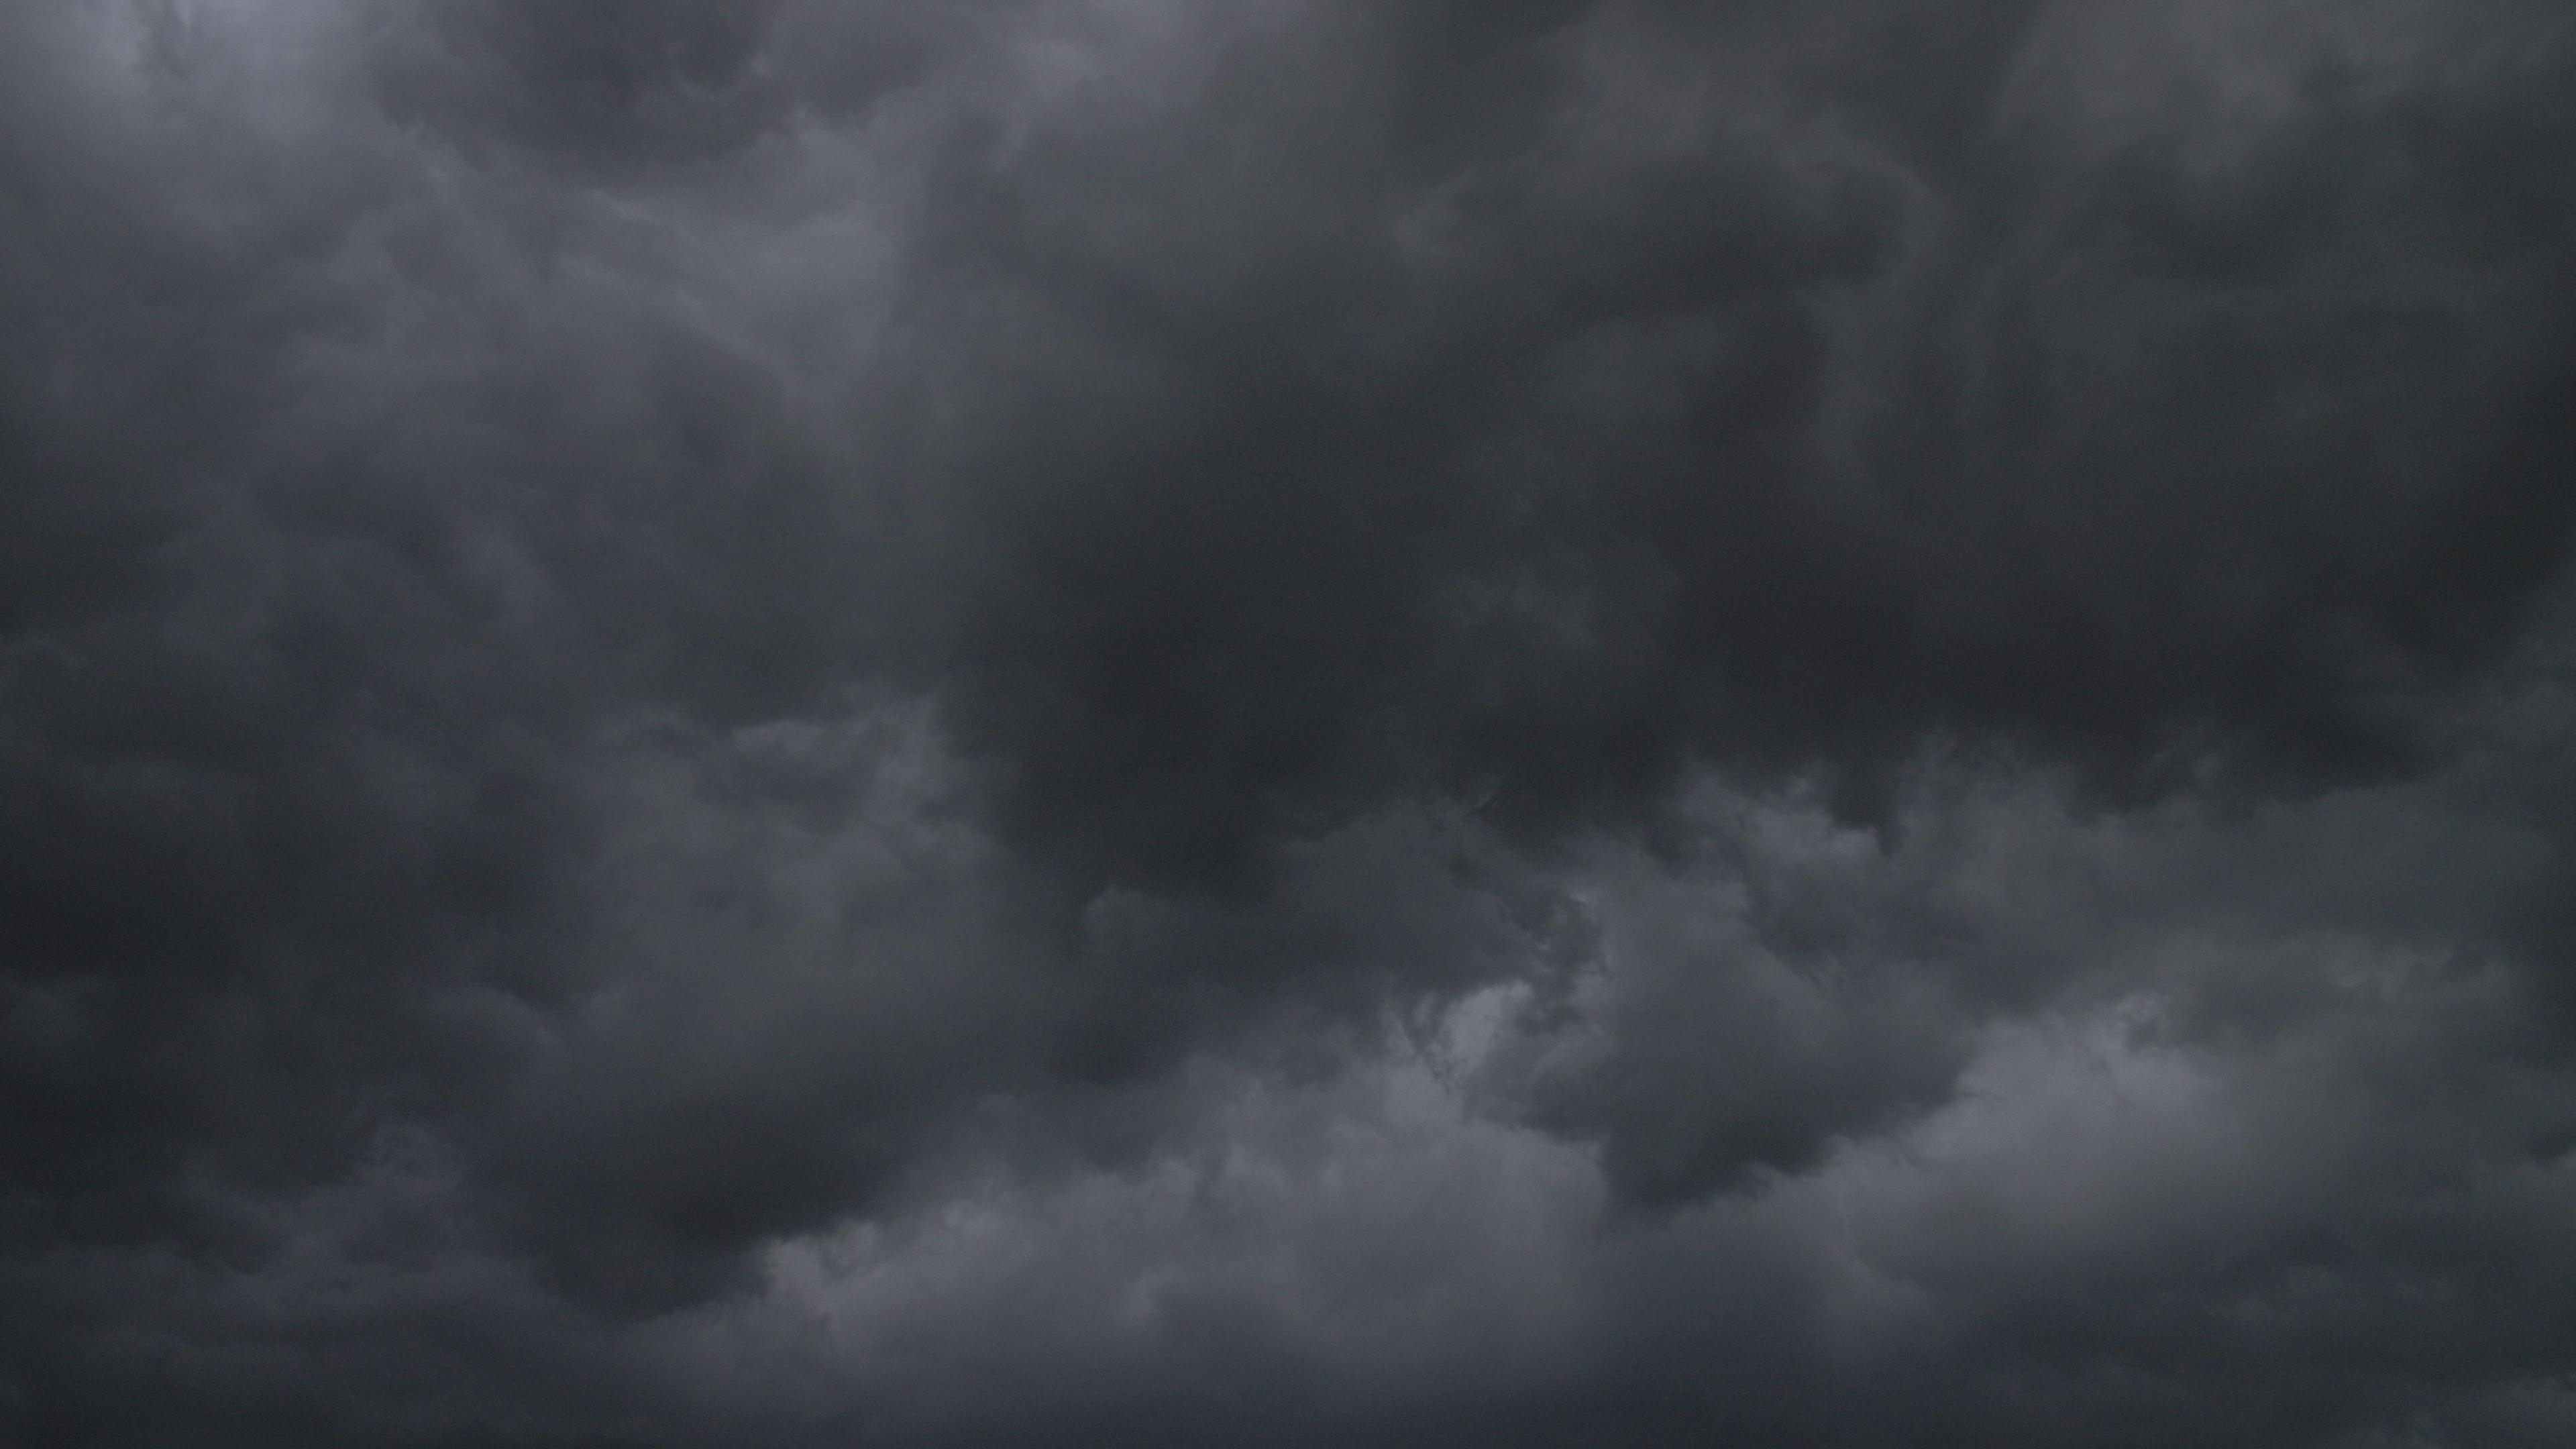 Gray Cloudy Sky: Rain-bearing cloud, Stormy weather, An impending downpour. 3840x2160 4K Wallpaper.